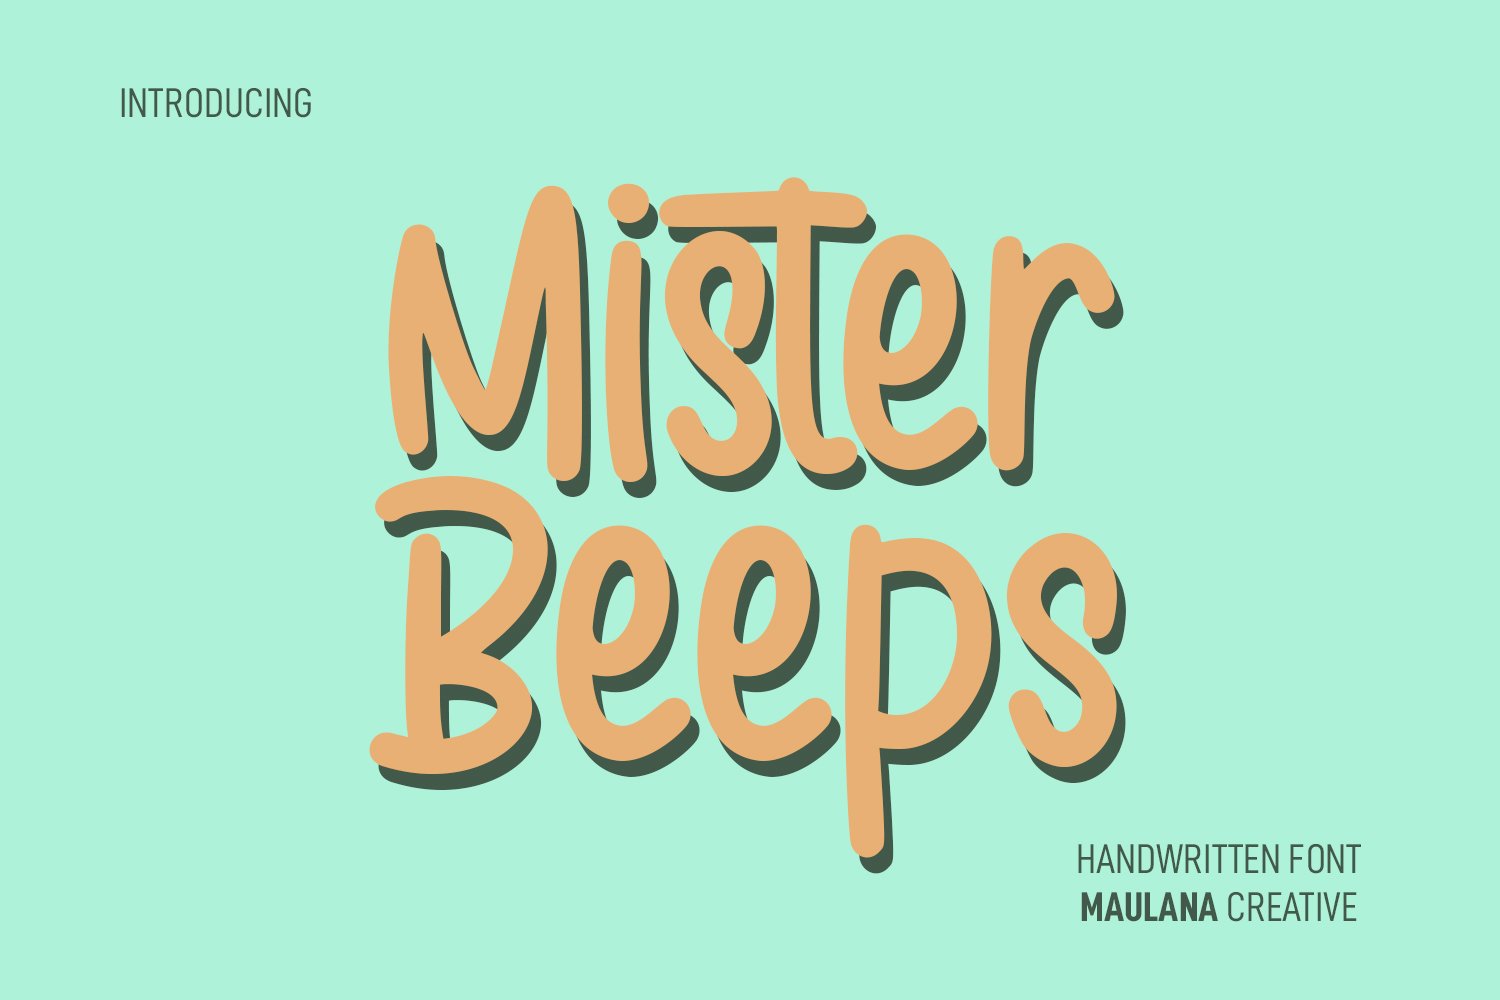 Mister Beeps Handwritten Font cover image.